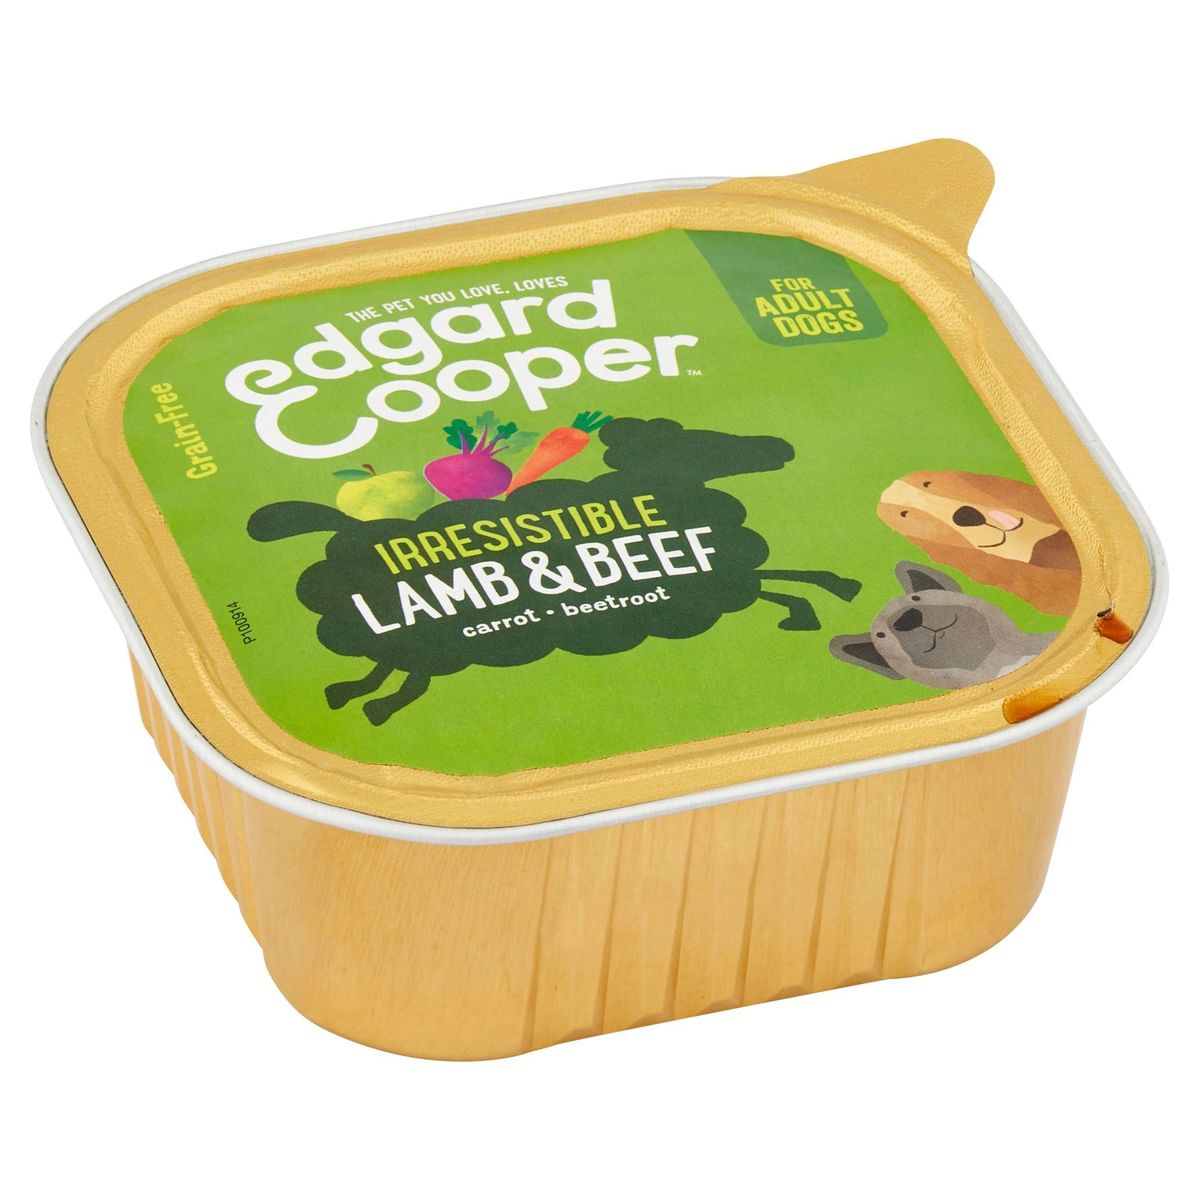 Edgard & Cooper Irresistible Lamb & Beef Carrot Beetroot 300 g